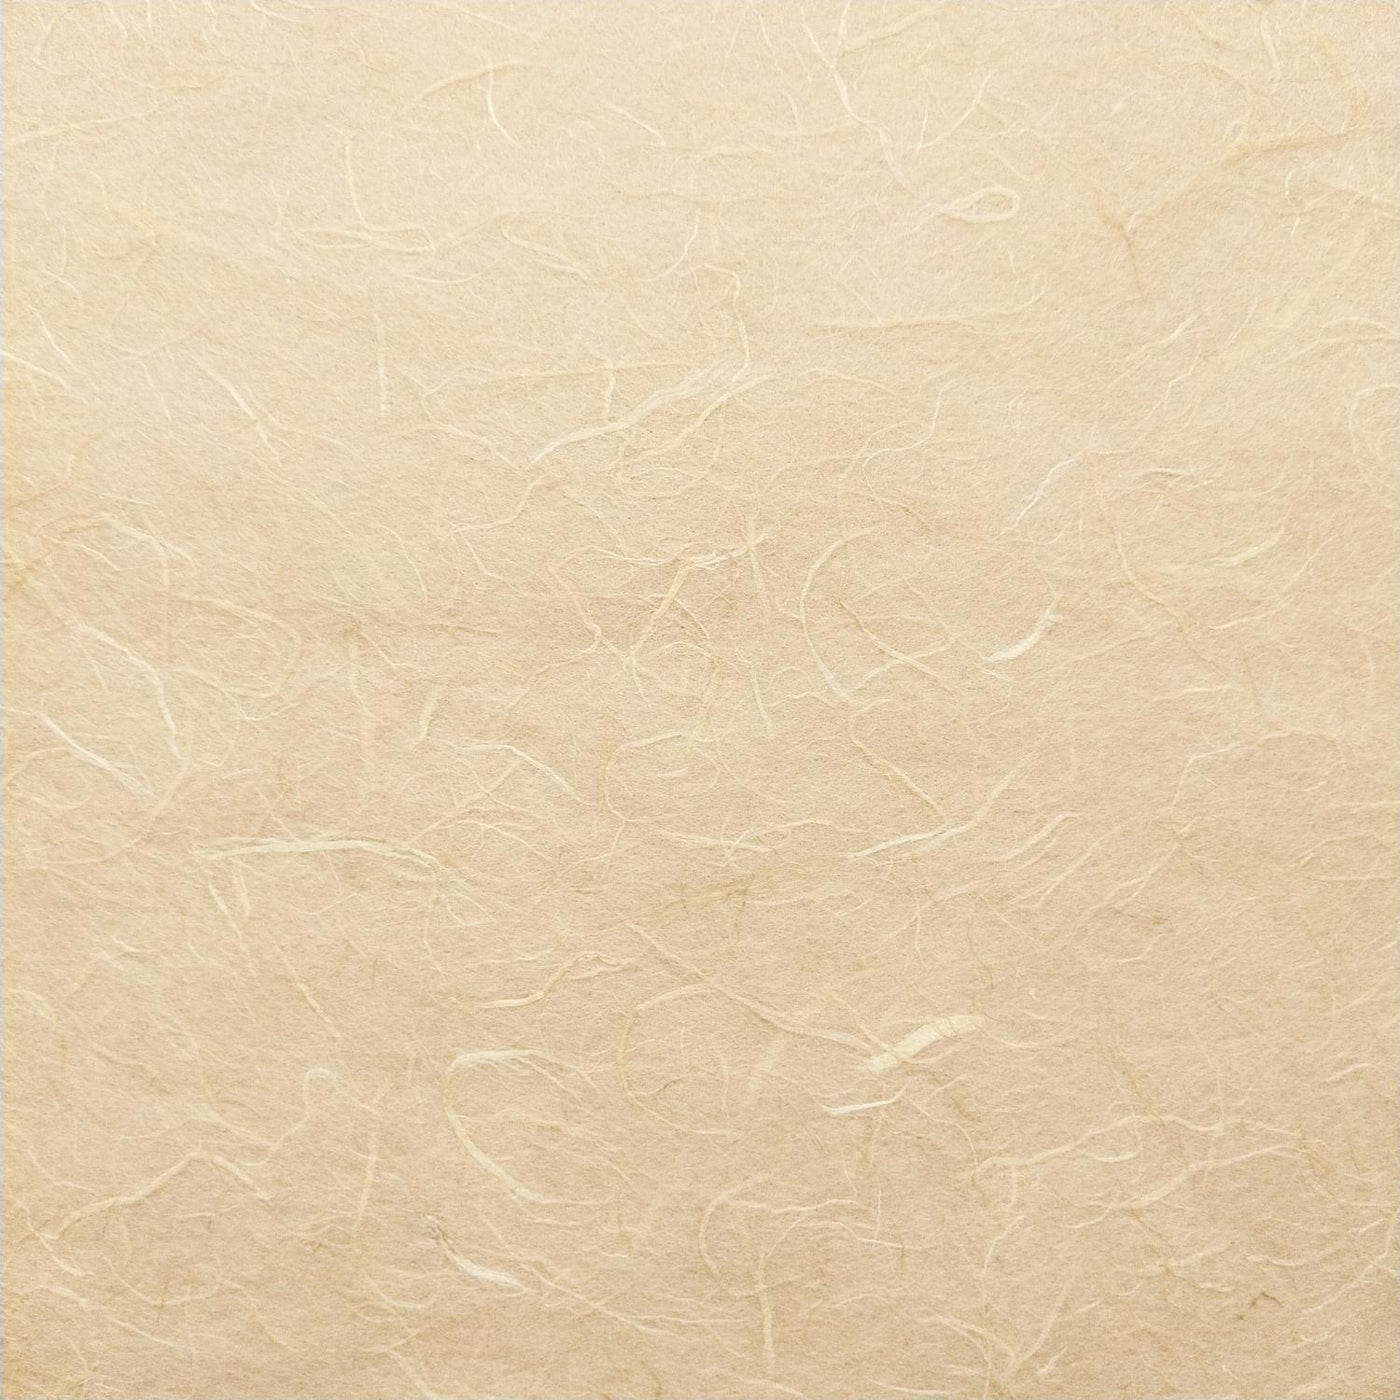 Unryu Kozo Mulberry Paper (Beach Sand)